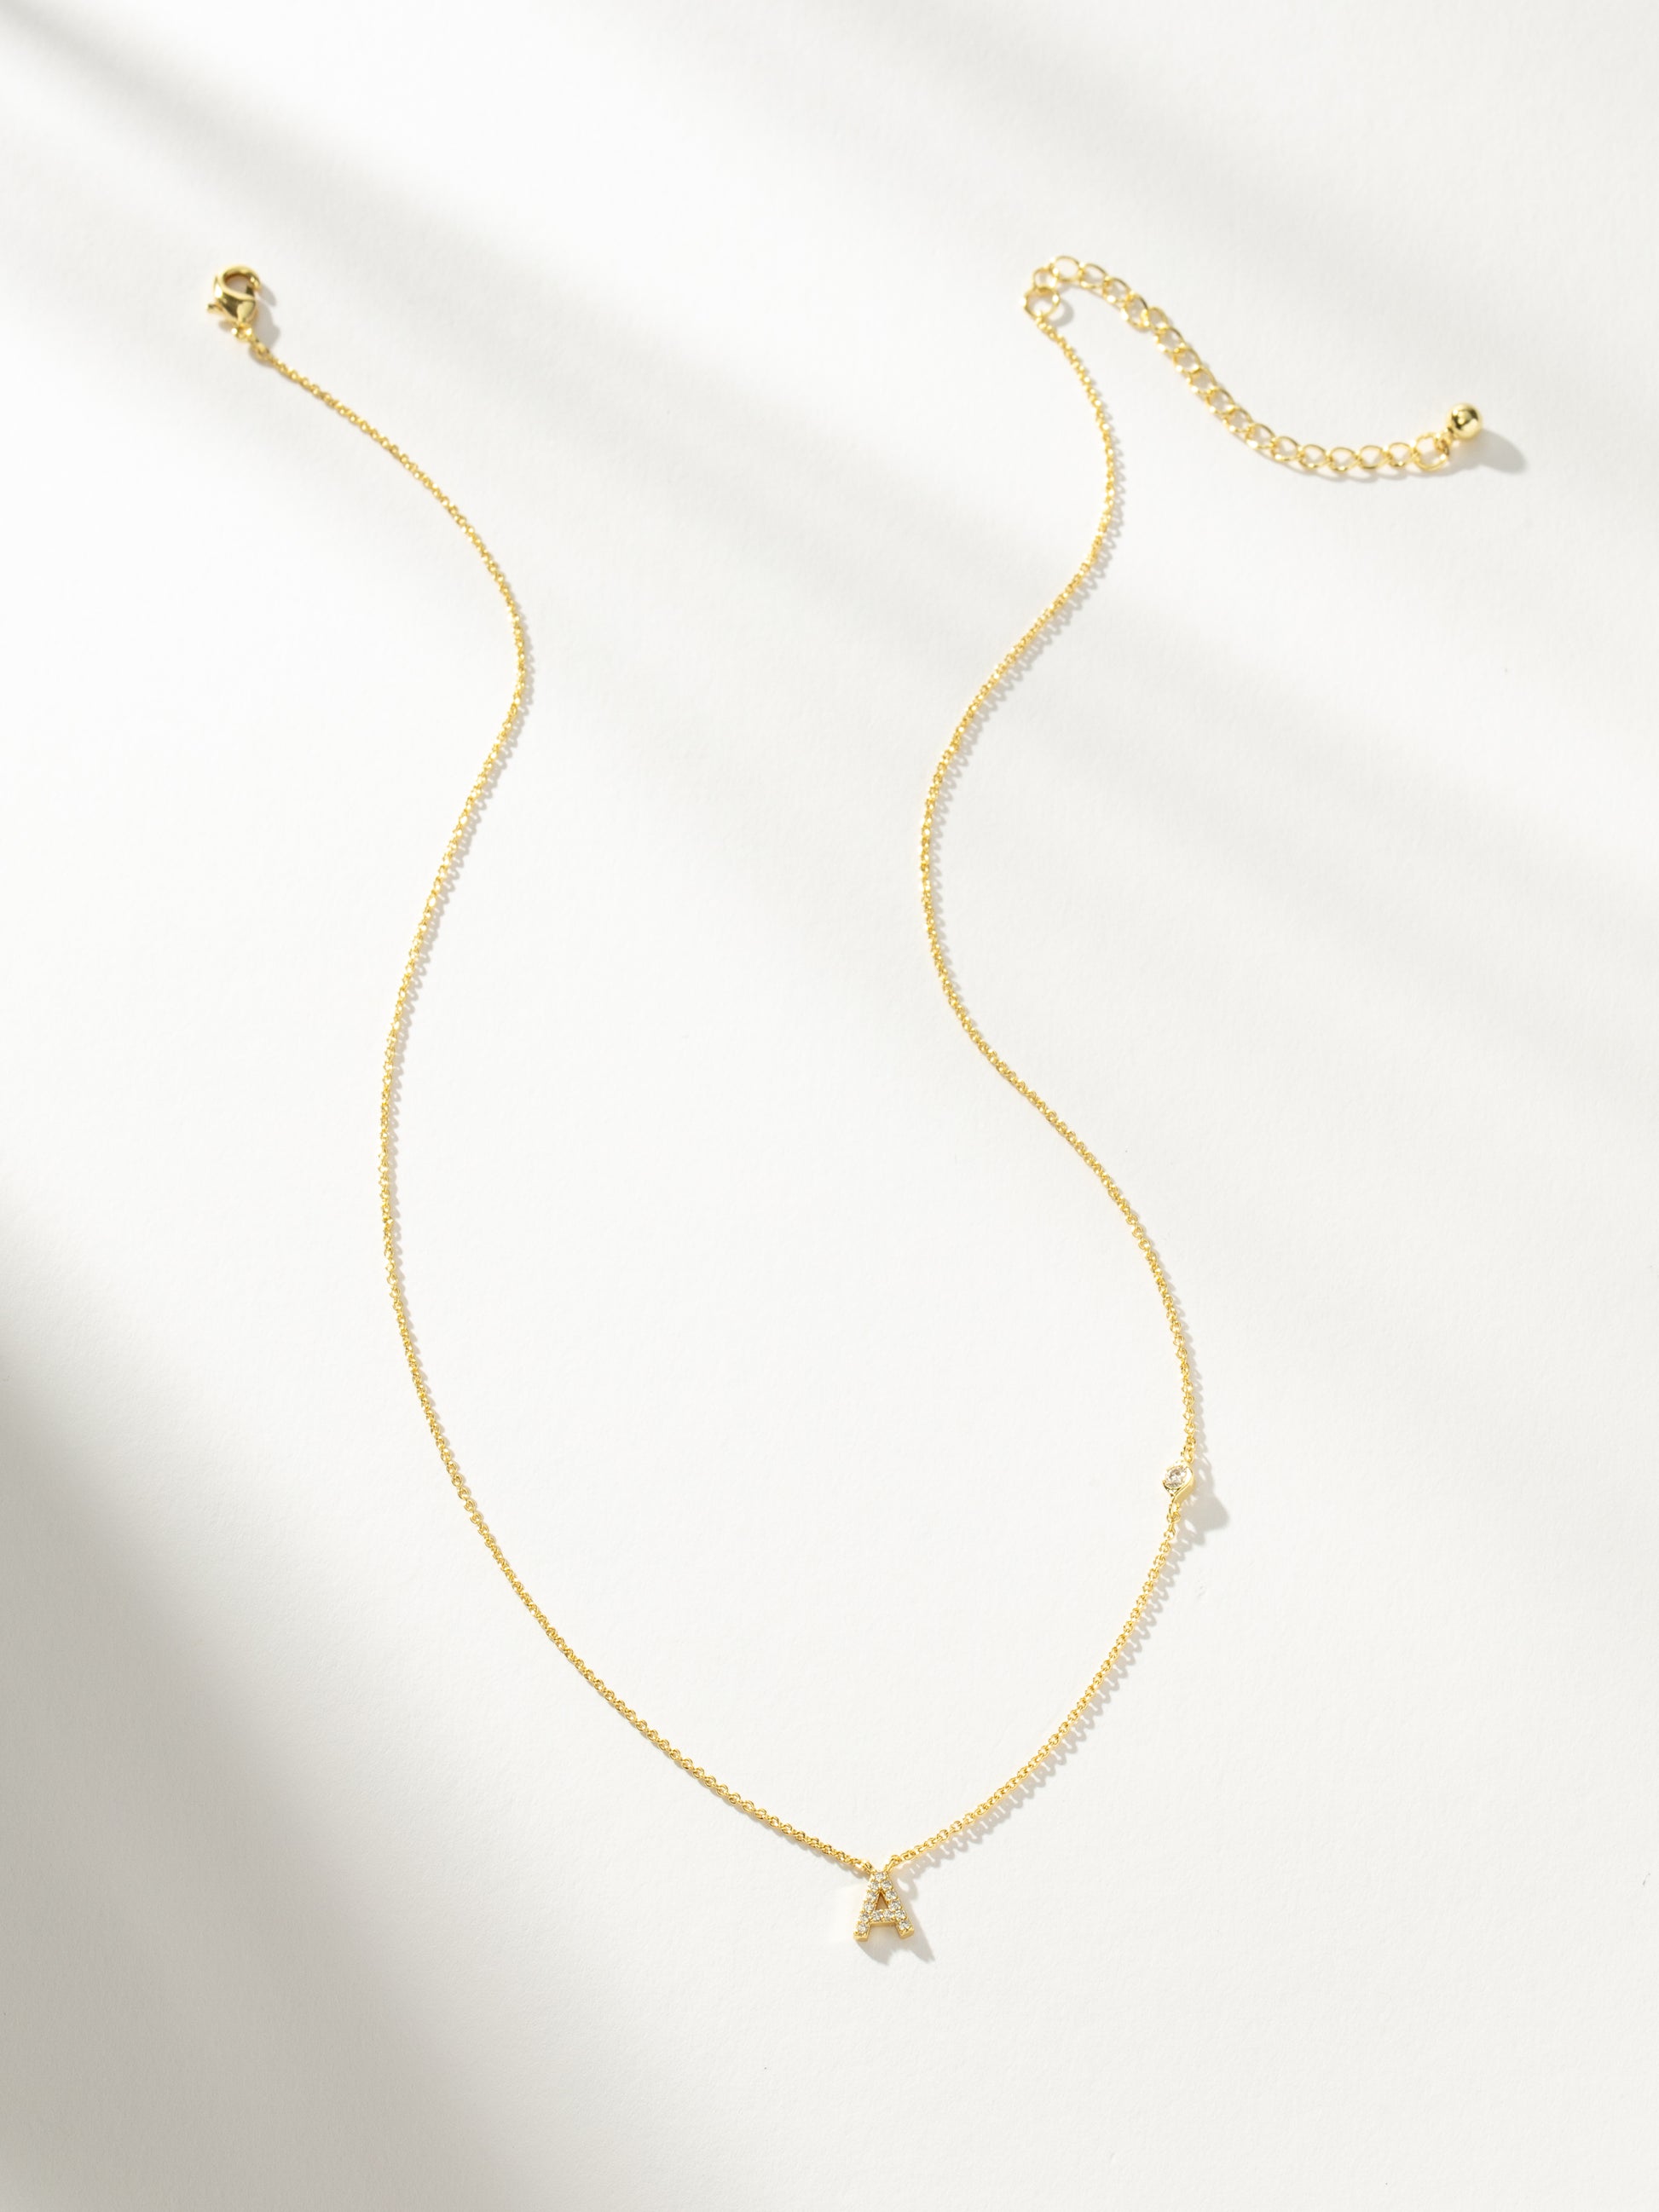 Pavé Initial Necklace | Gold | Product Image | Uncommon James